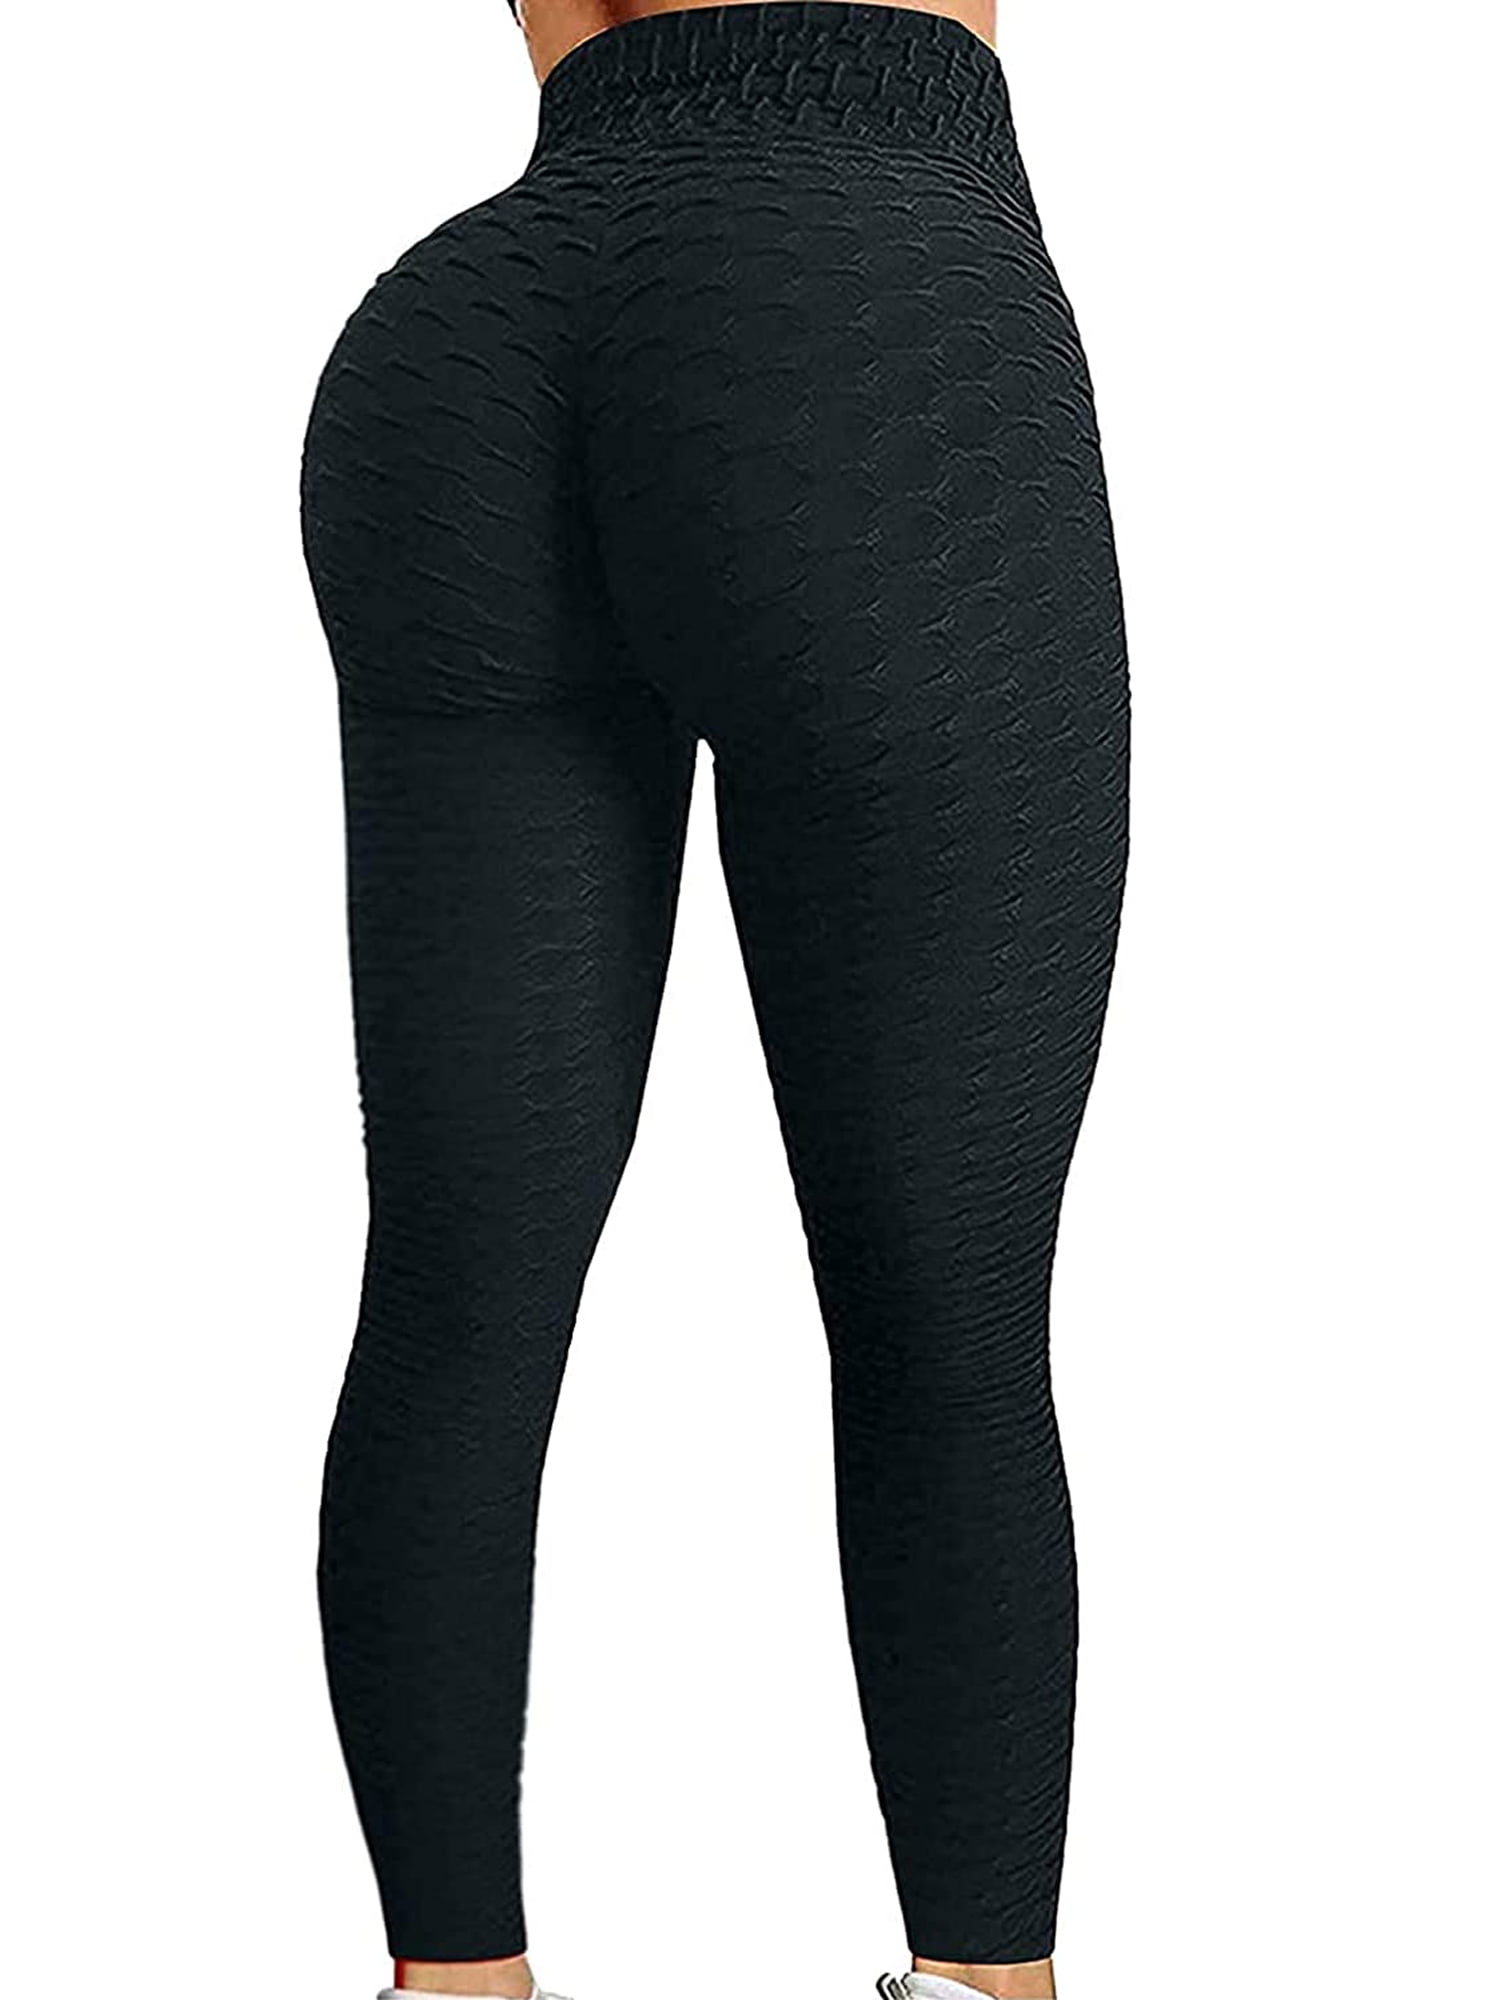 Canrulo Women Booty Legging Yoga Pants Bubble Butt Lifting Workout Tights  Black XXL